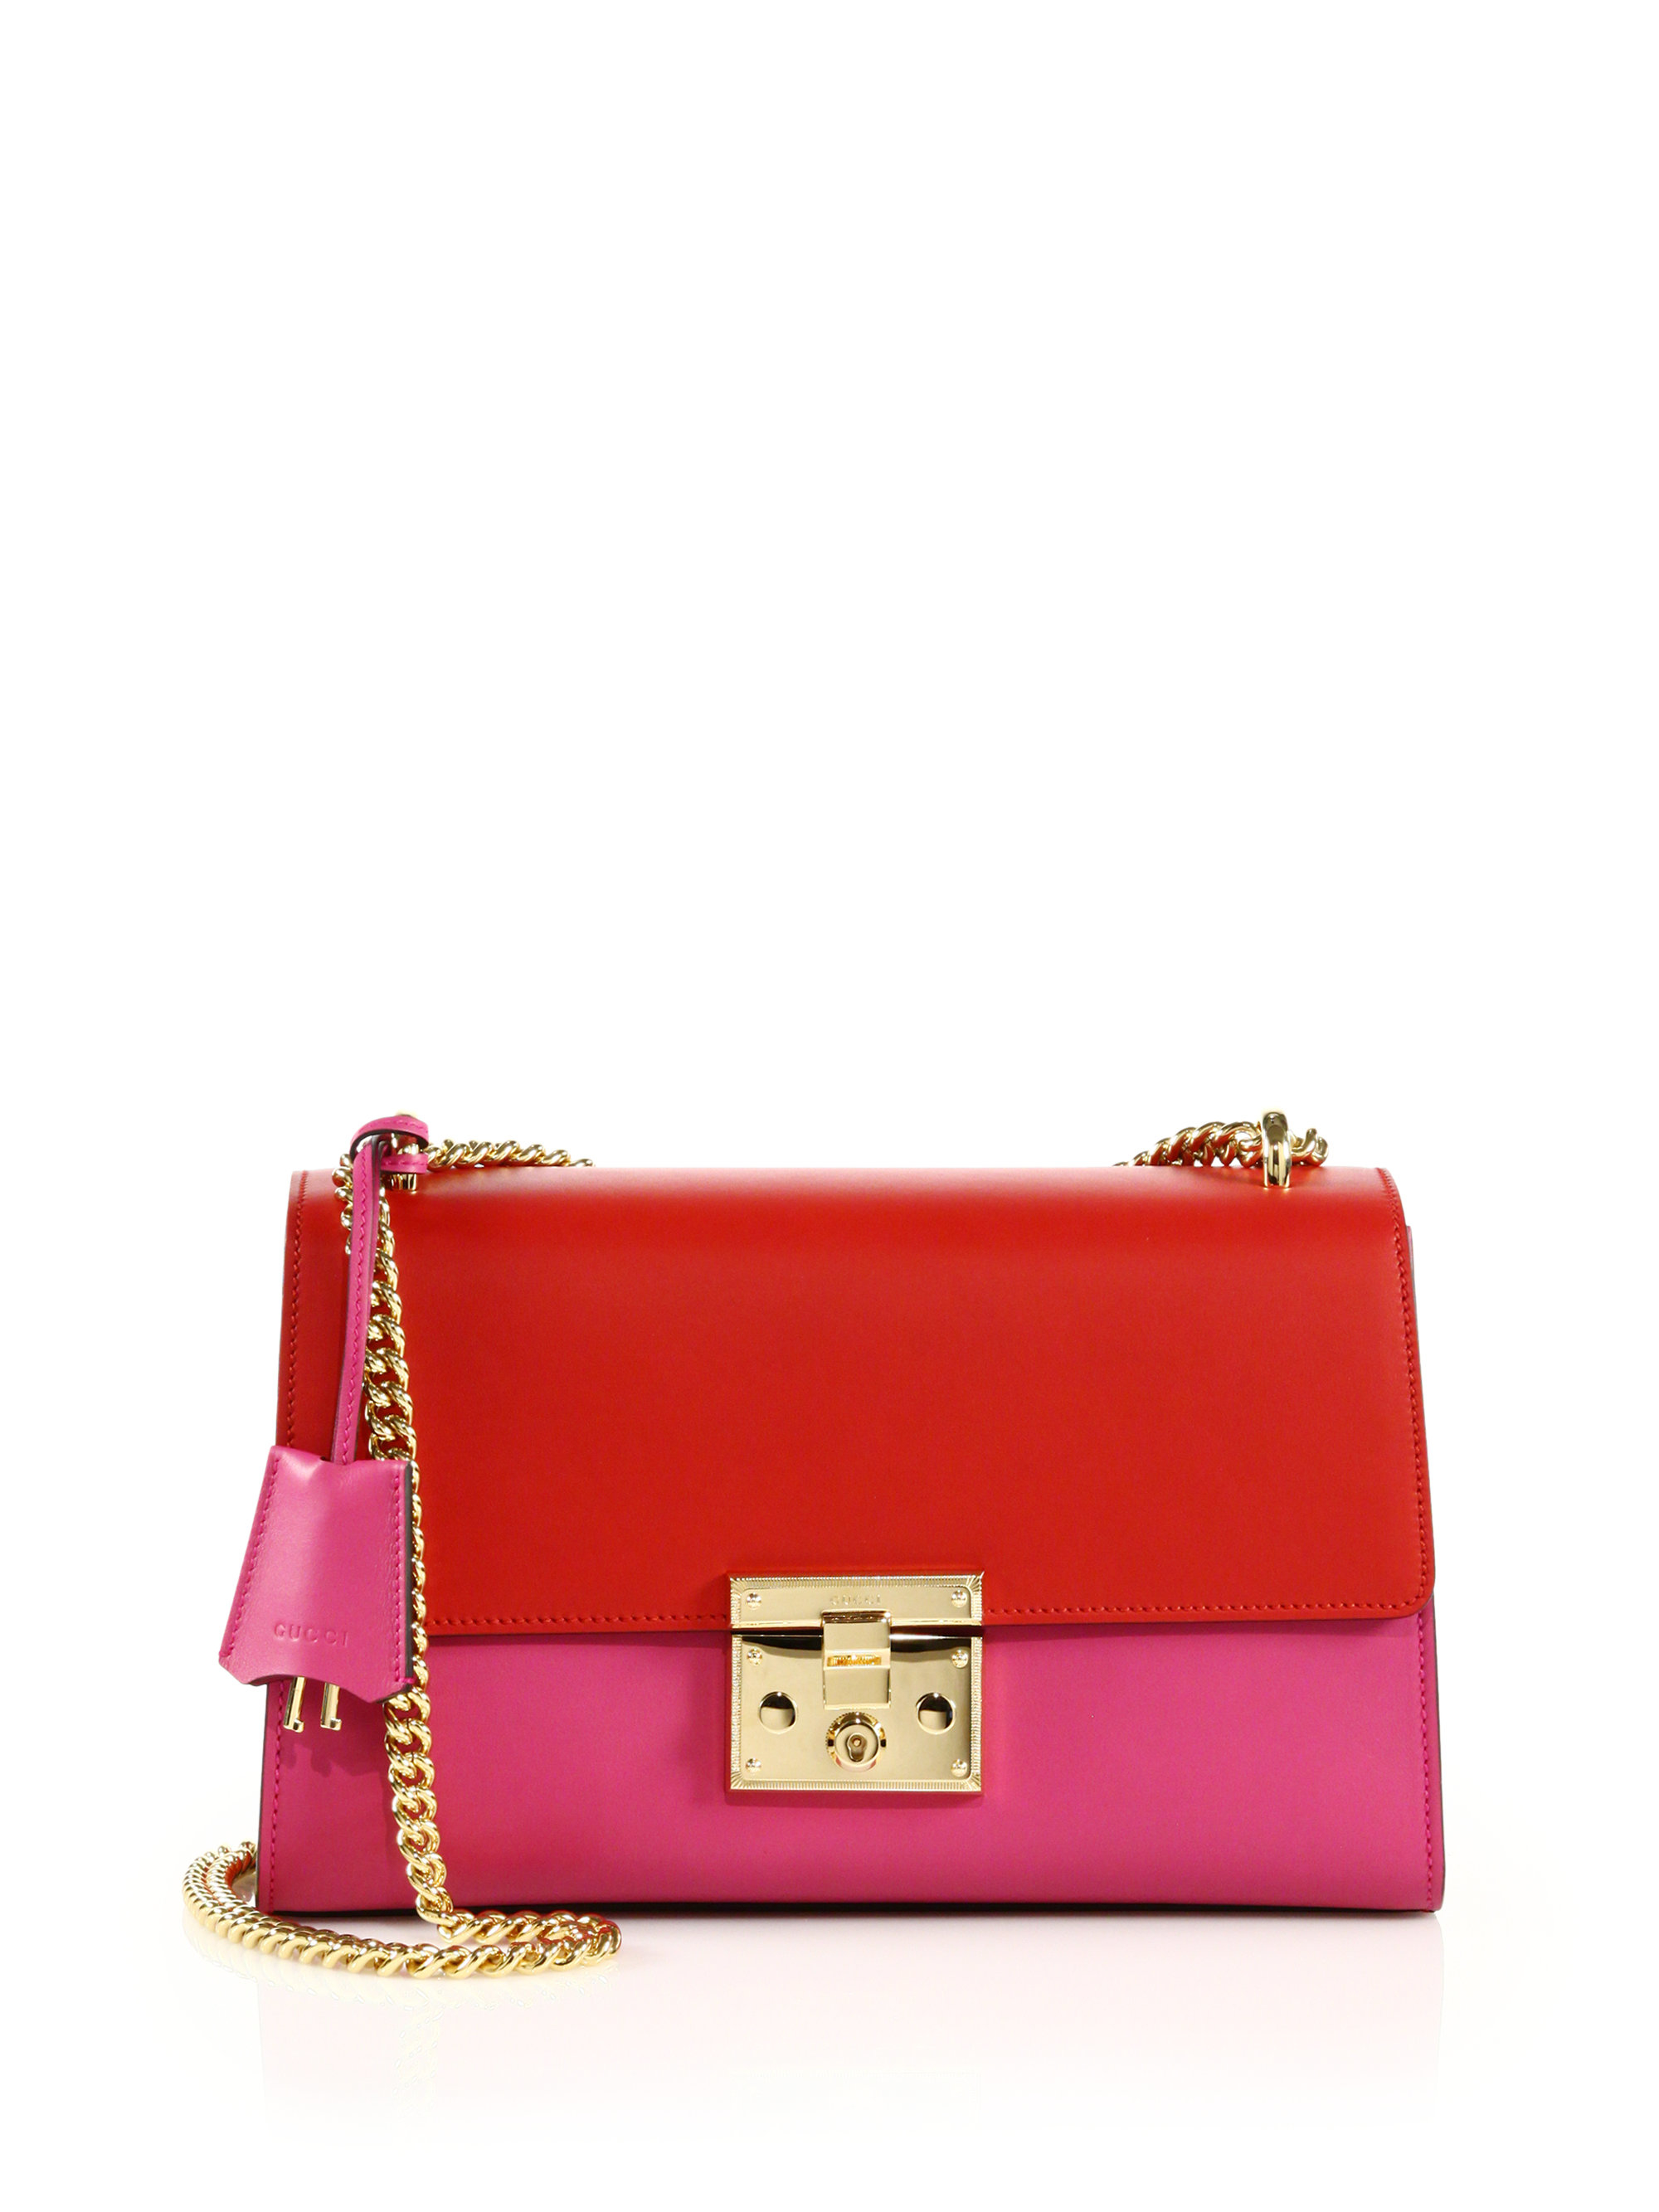 Gucci Padlock Medium Leather Shoulder Bag in Pink | Lyst